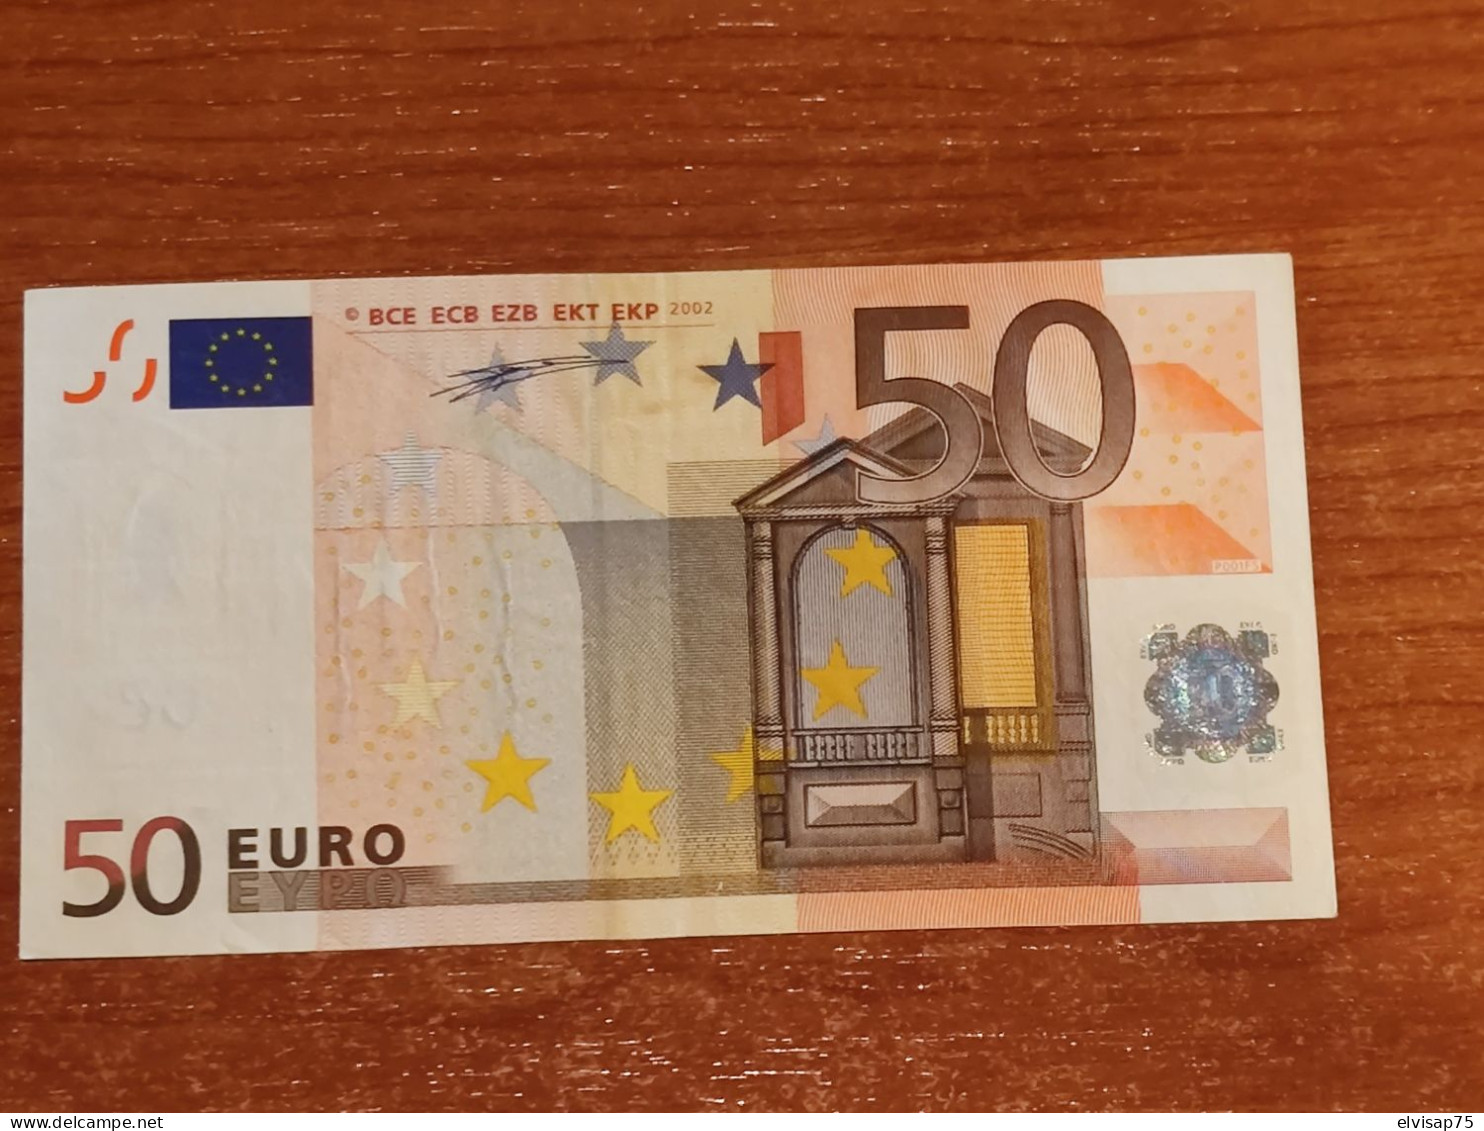 50 EURO SPAIN DUISENBERG V P001 Very Good Condition - 50 Euro